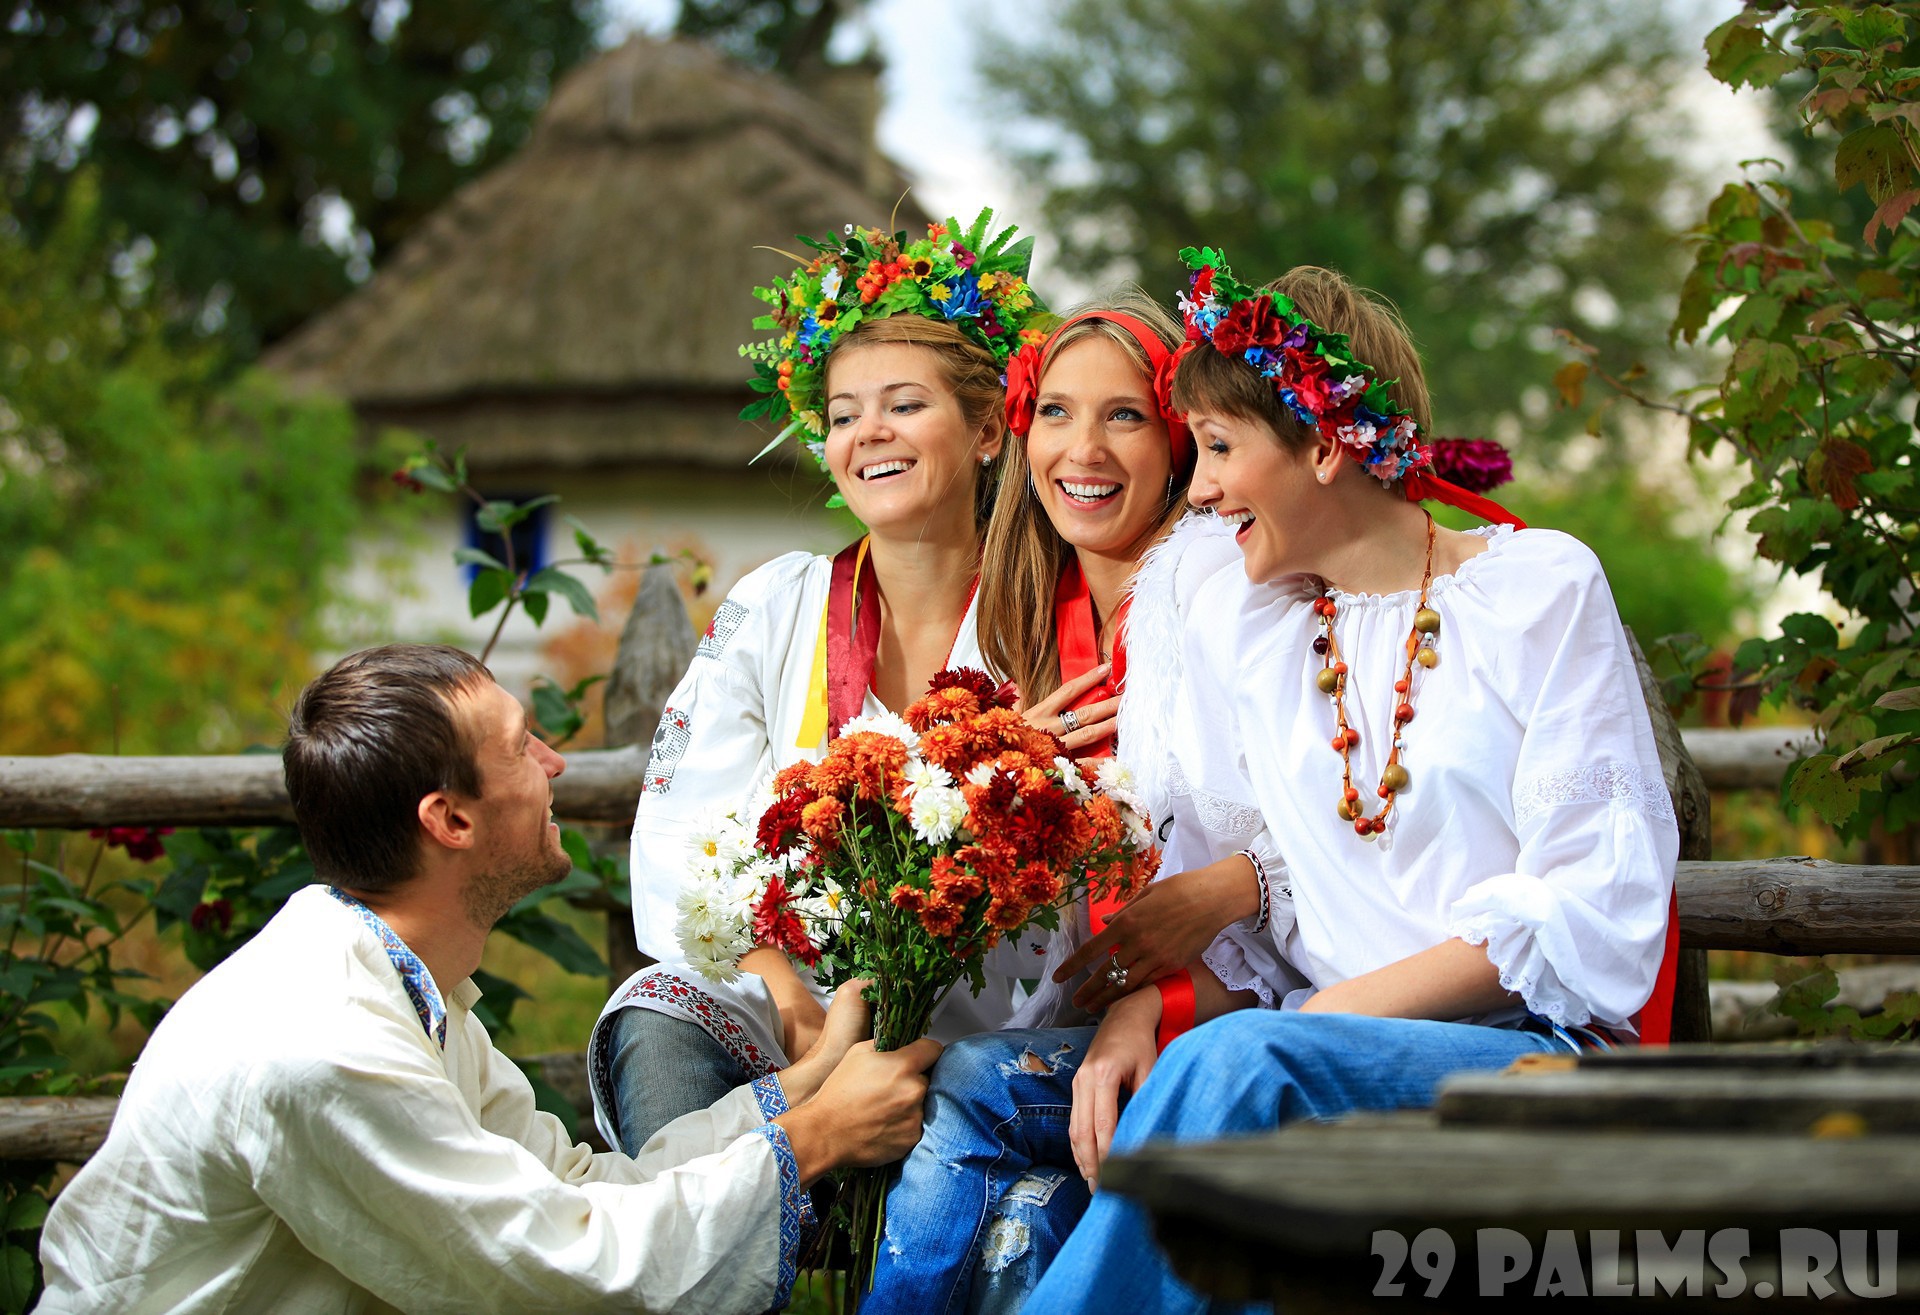 Ukrainian couple